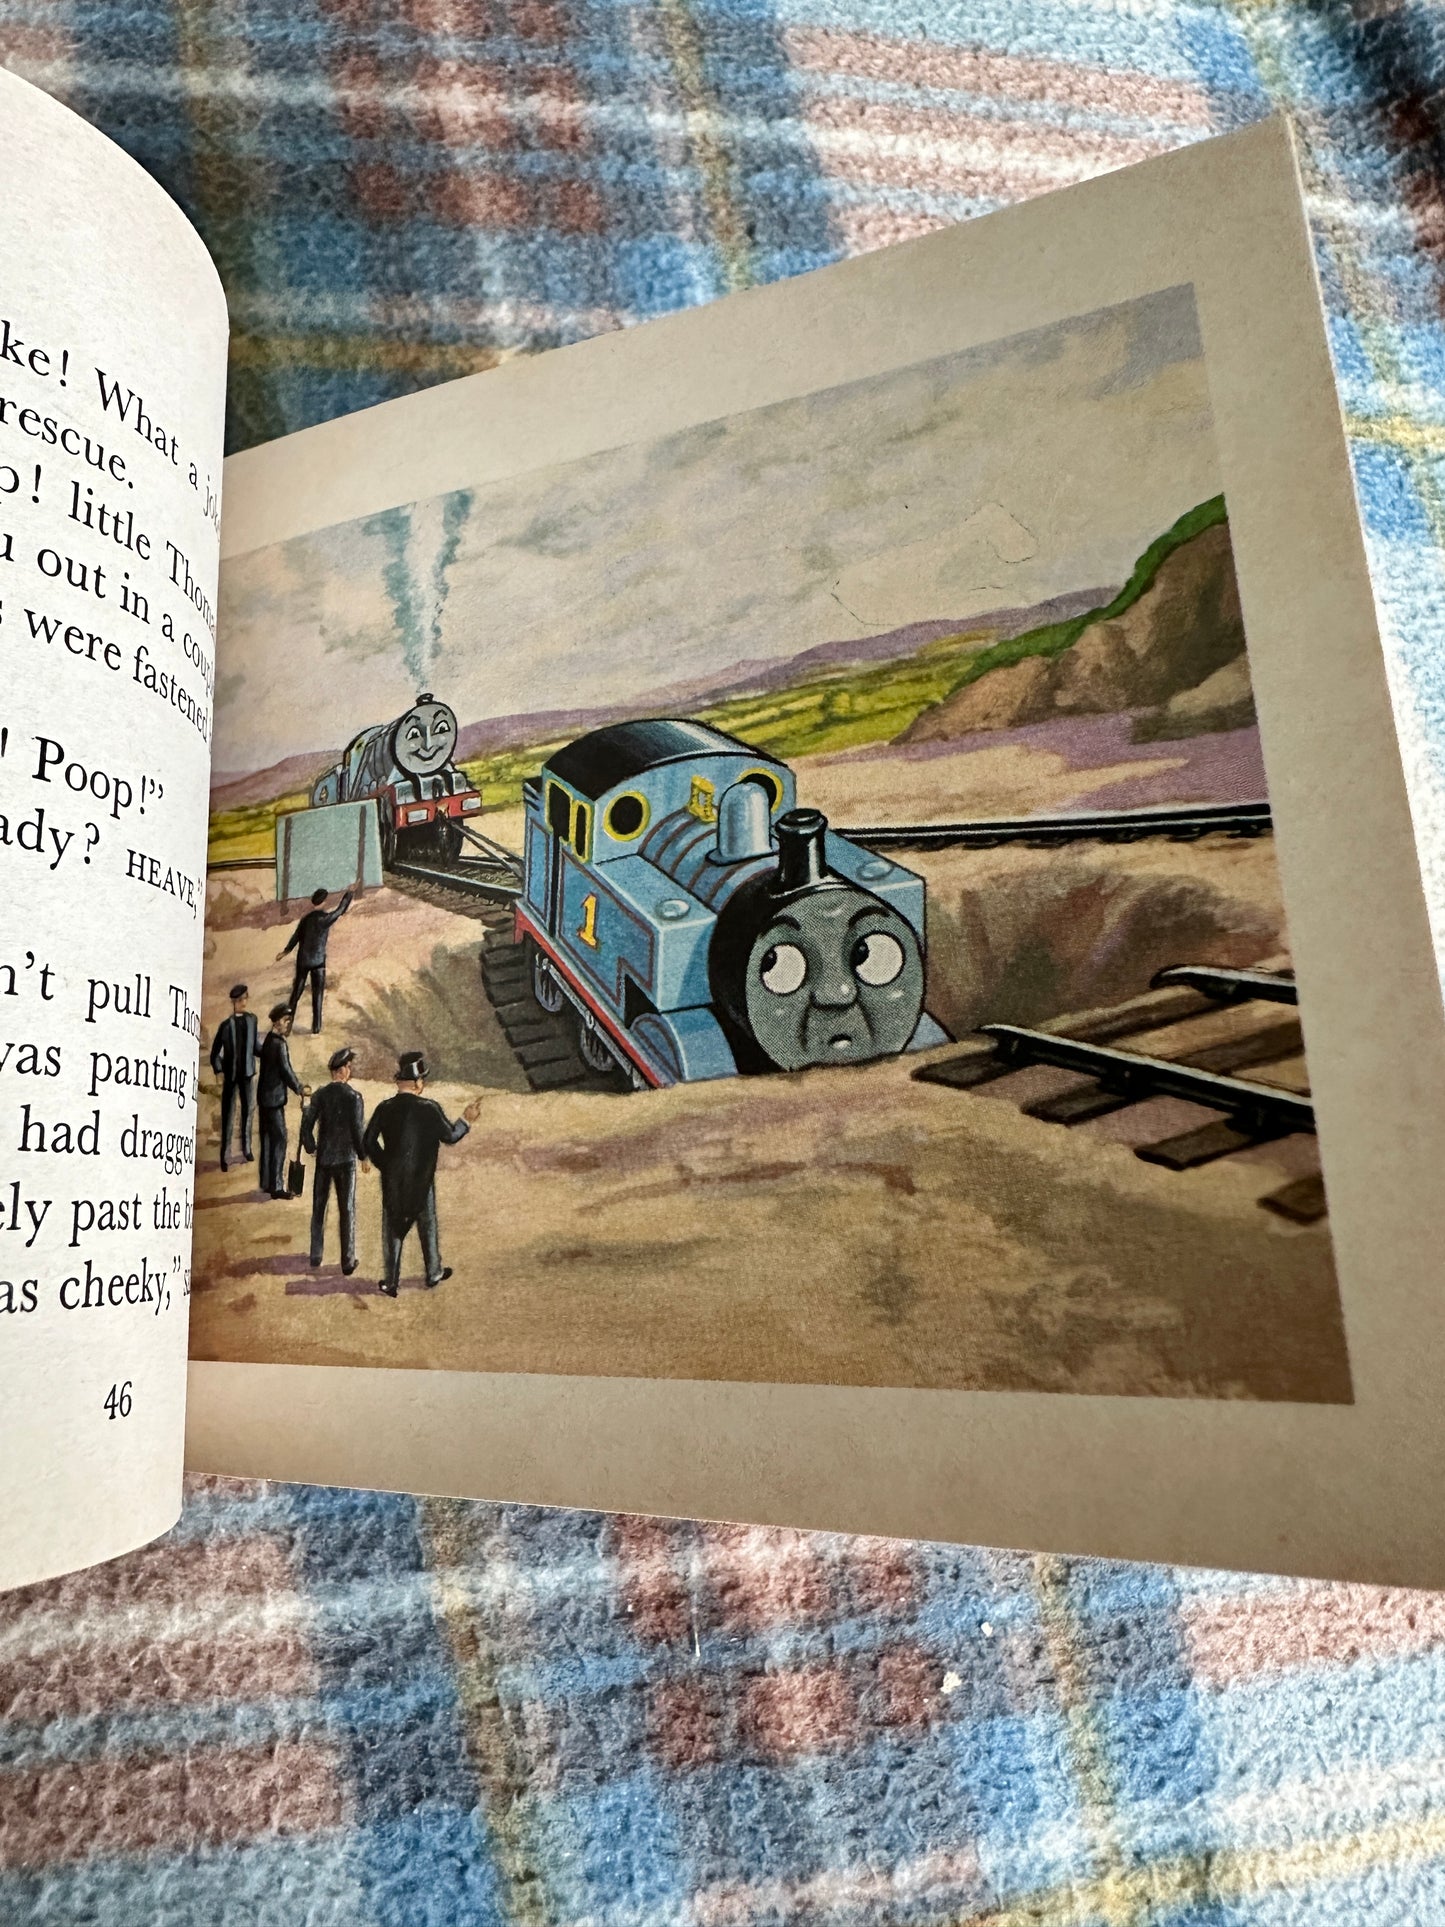 1984 Gordon The Big Engine - The Rev W. Awdry(Illust C. Reginald Dalby) Kaye & Ward Published